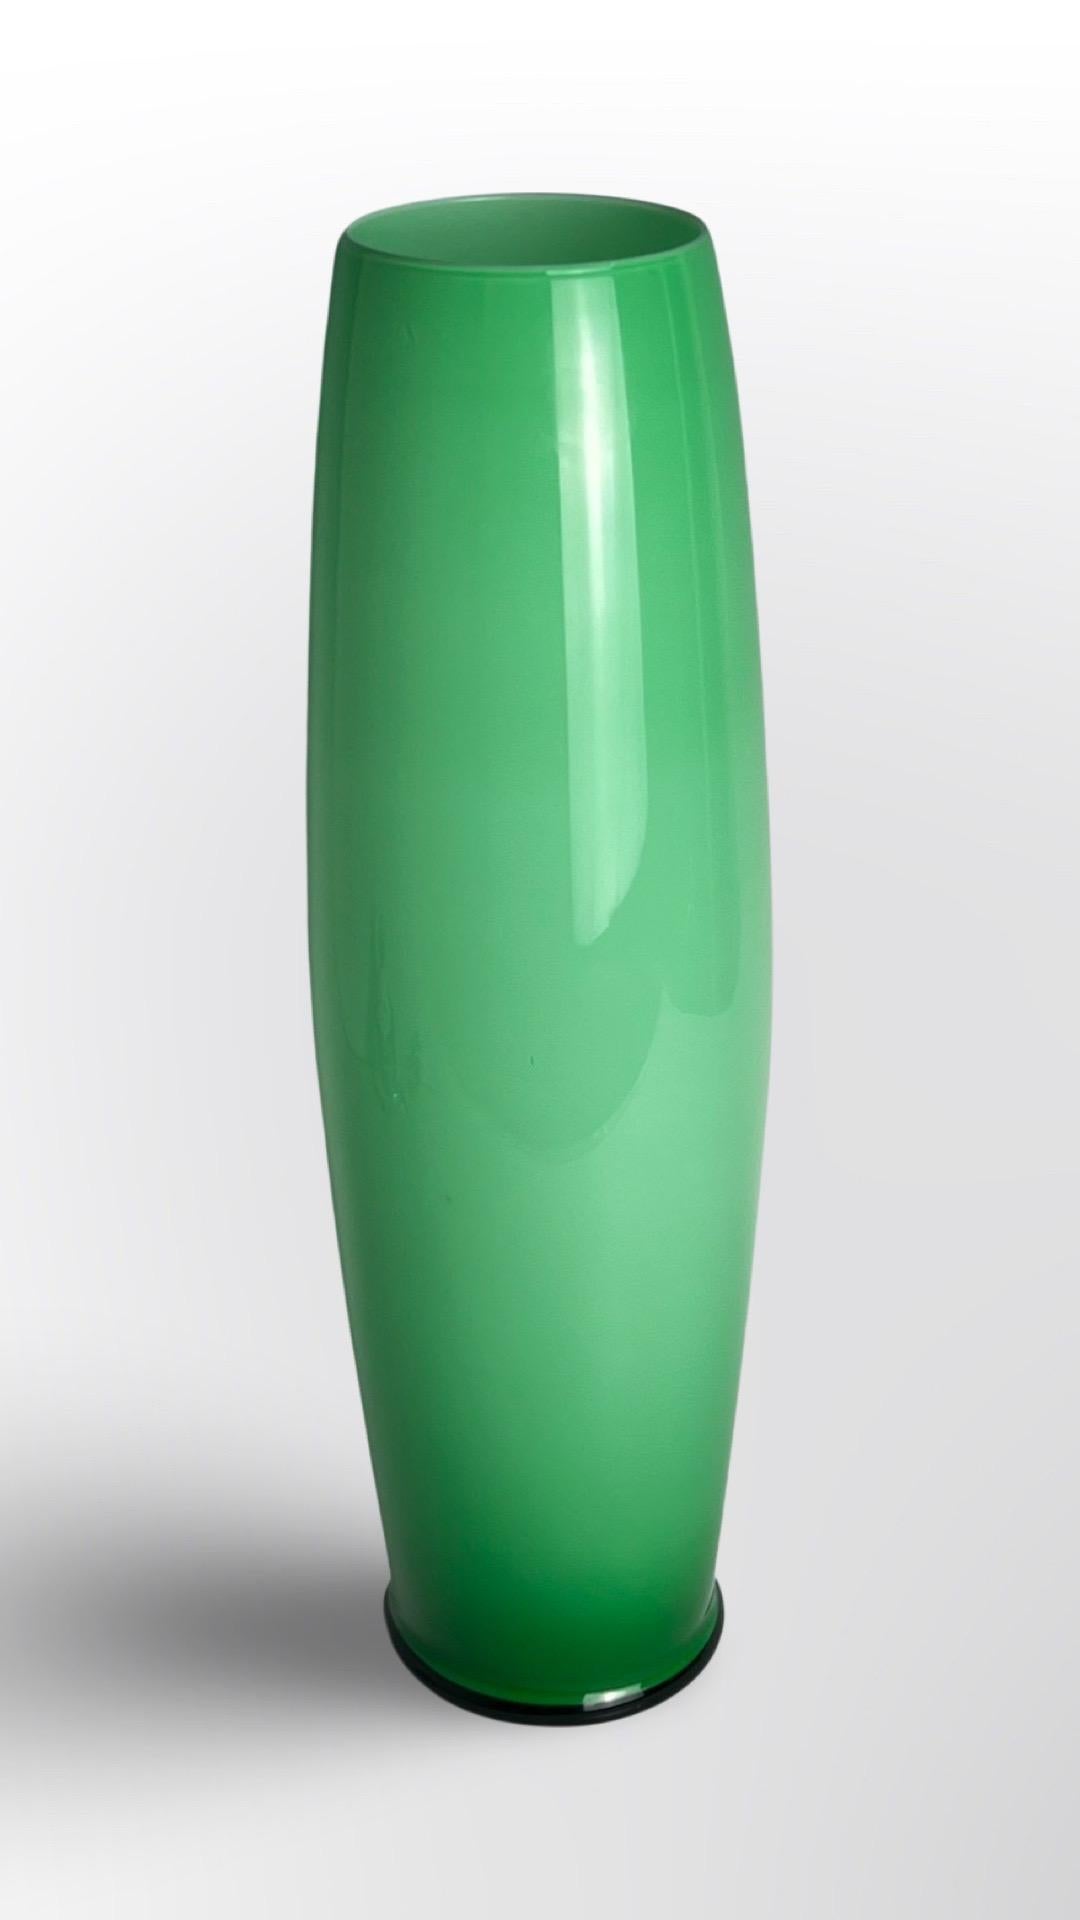 Un grand vase cylindrique en verre de Murano de couleur vert jade.
Fabriqué en Italie
Circa : 1960